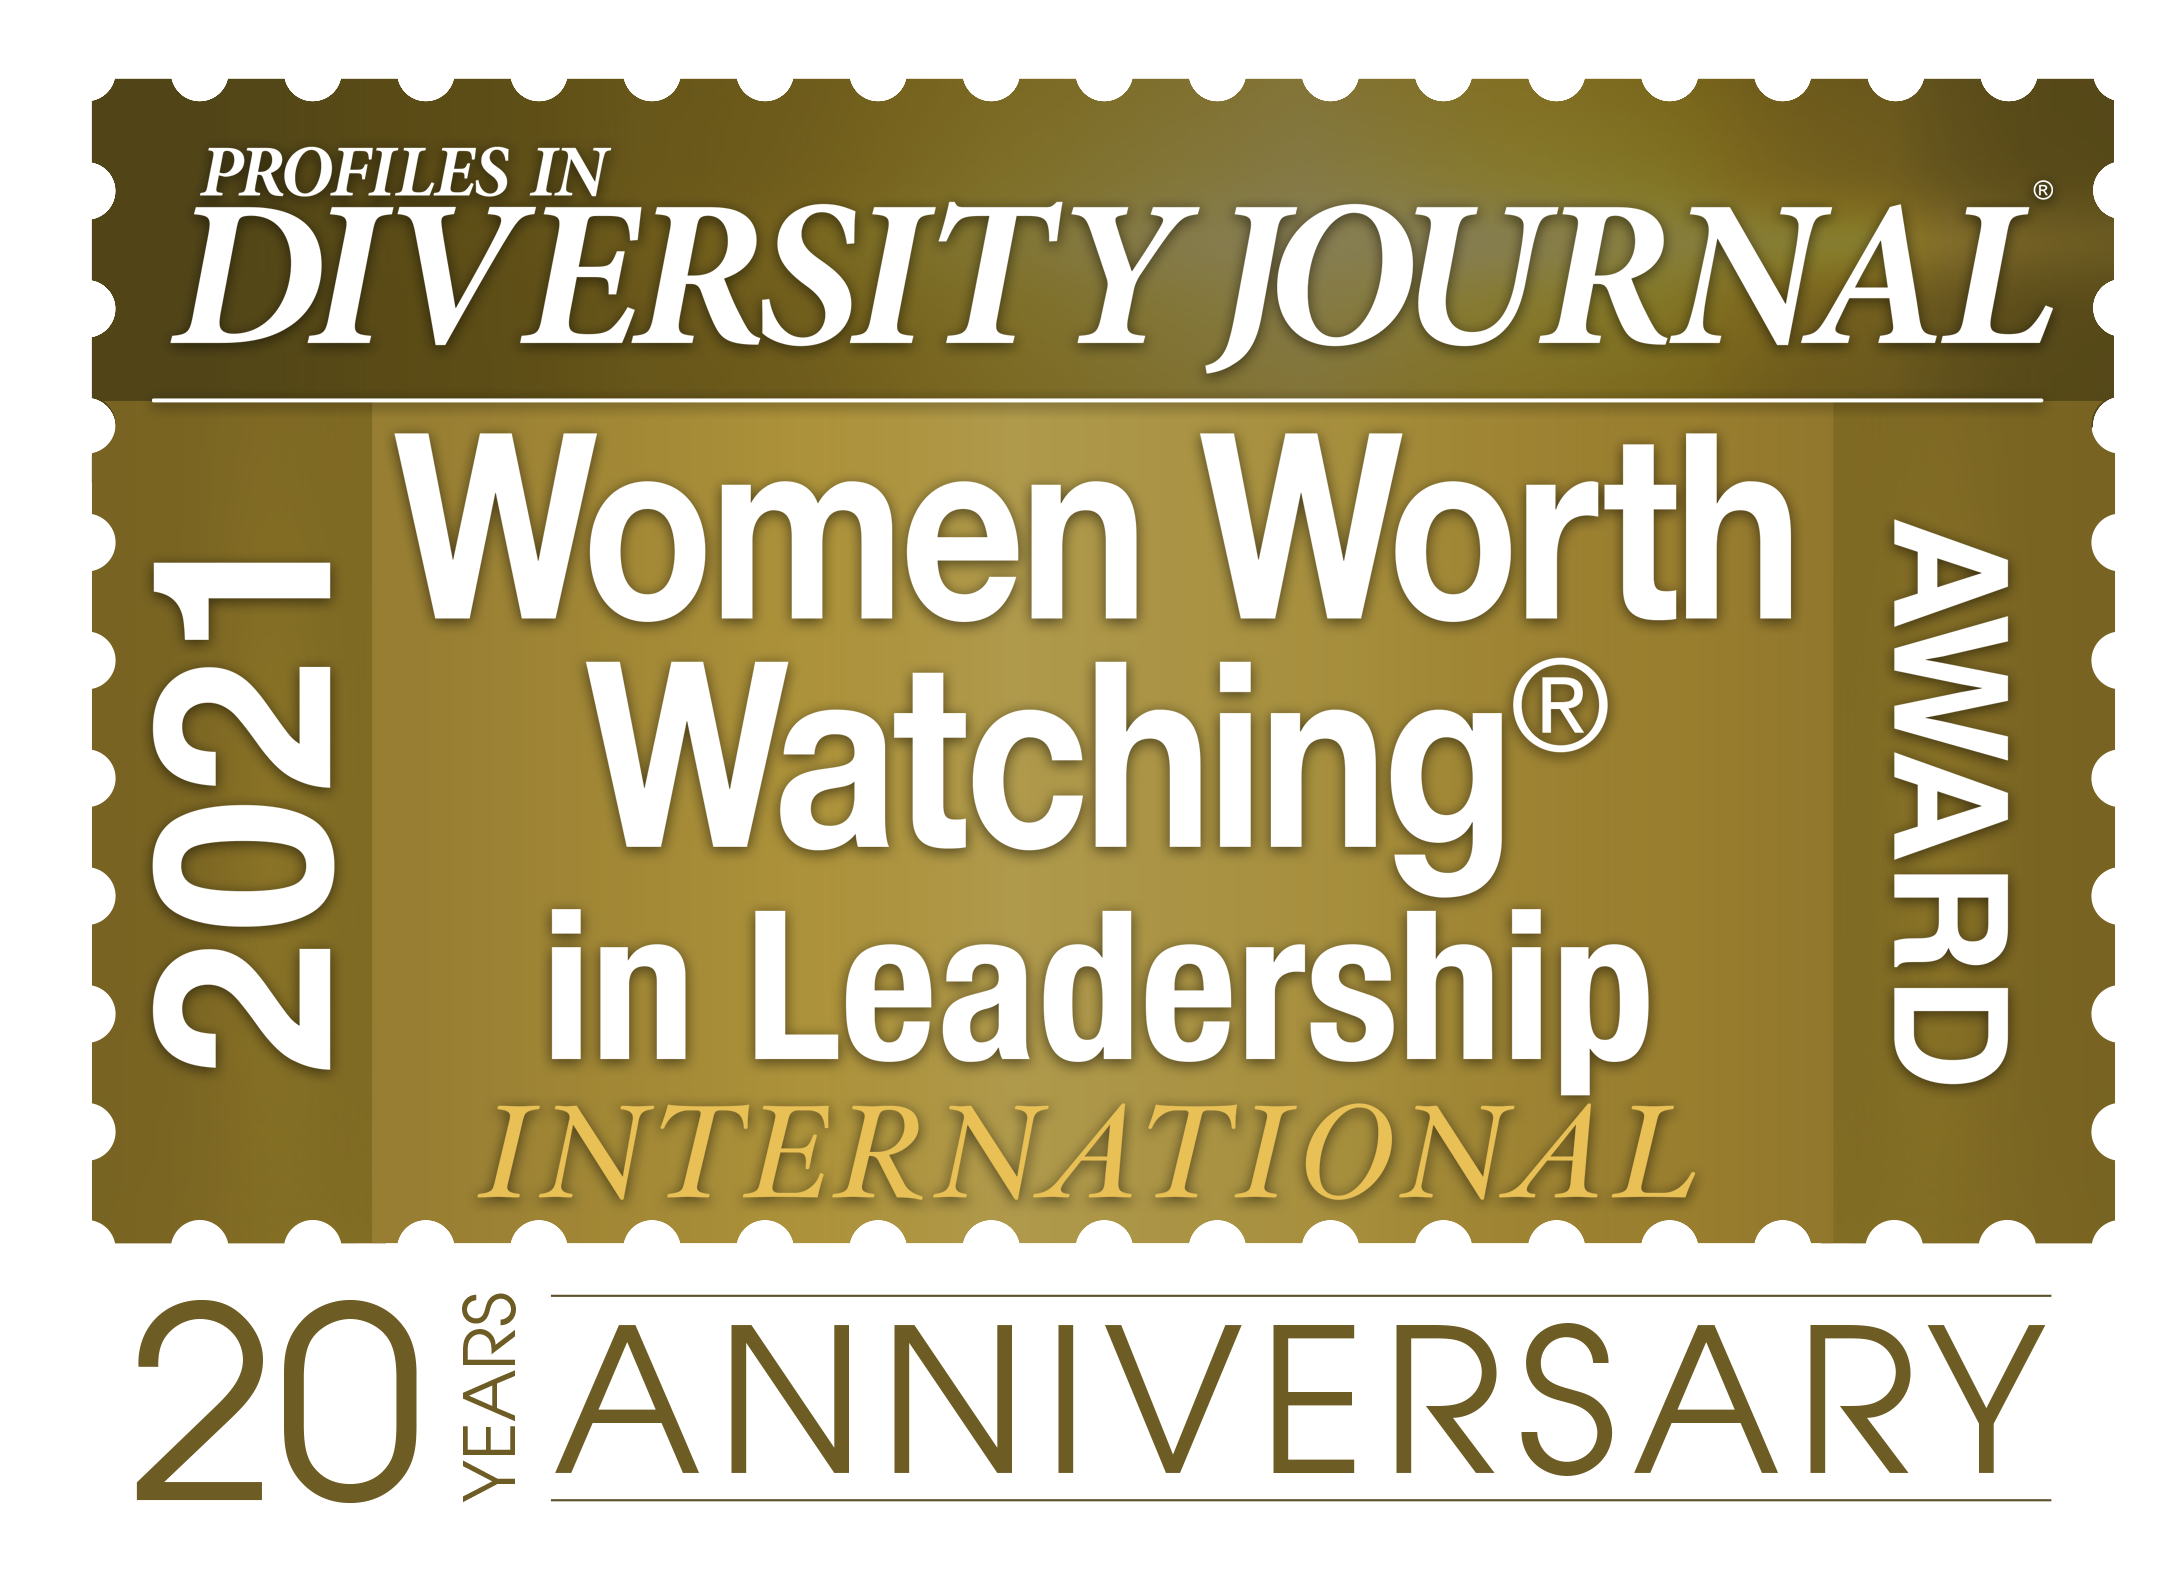 Profiles in Diversity Journal Women Worth Watching in Leadership Award 2021